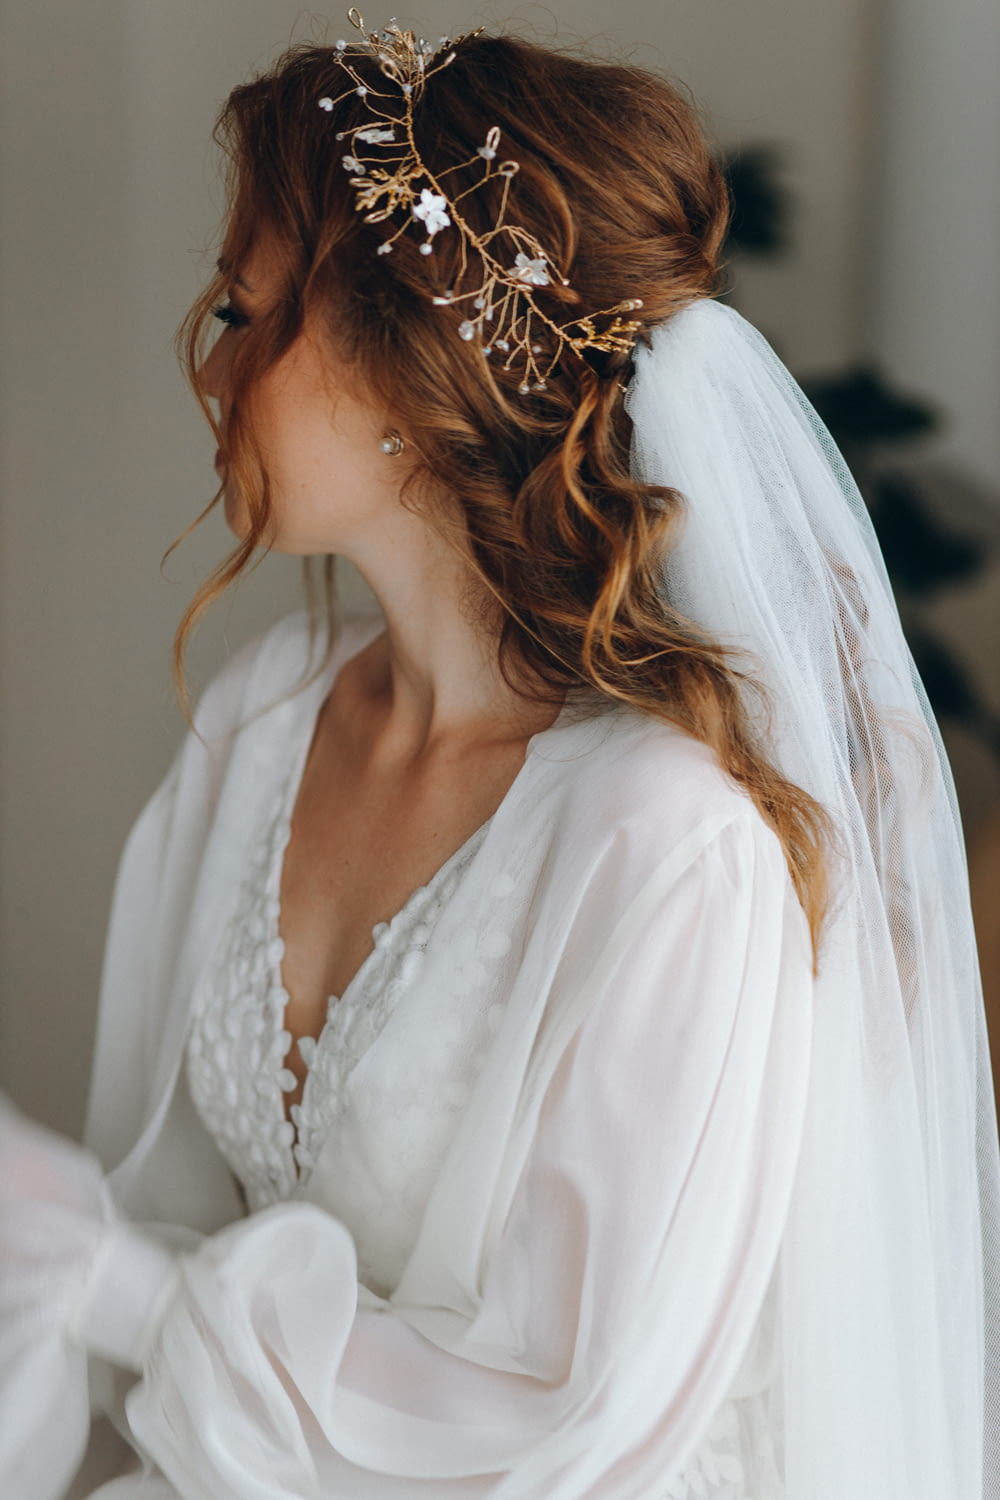 a woman wearing a veil and a tiara